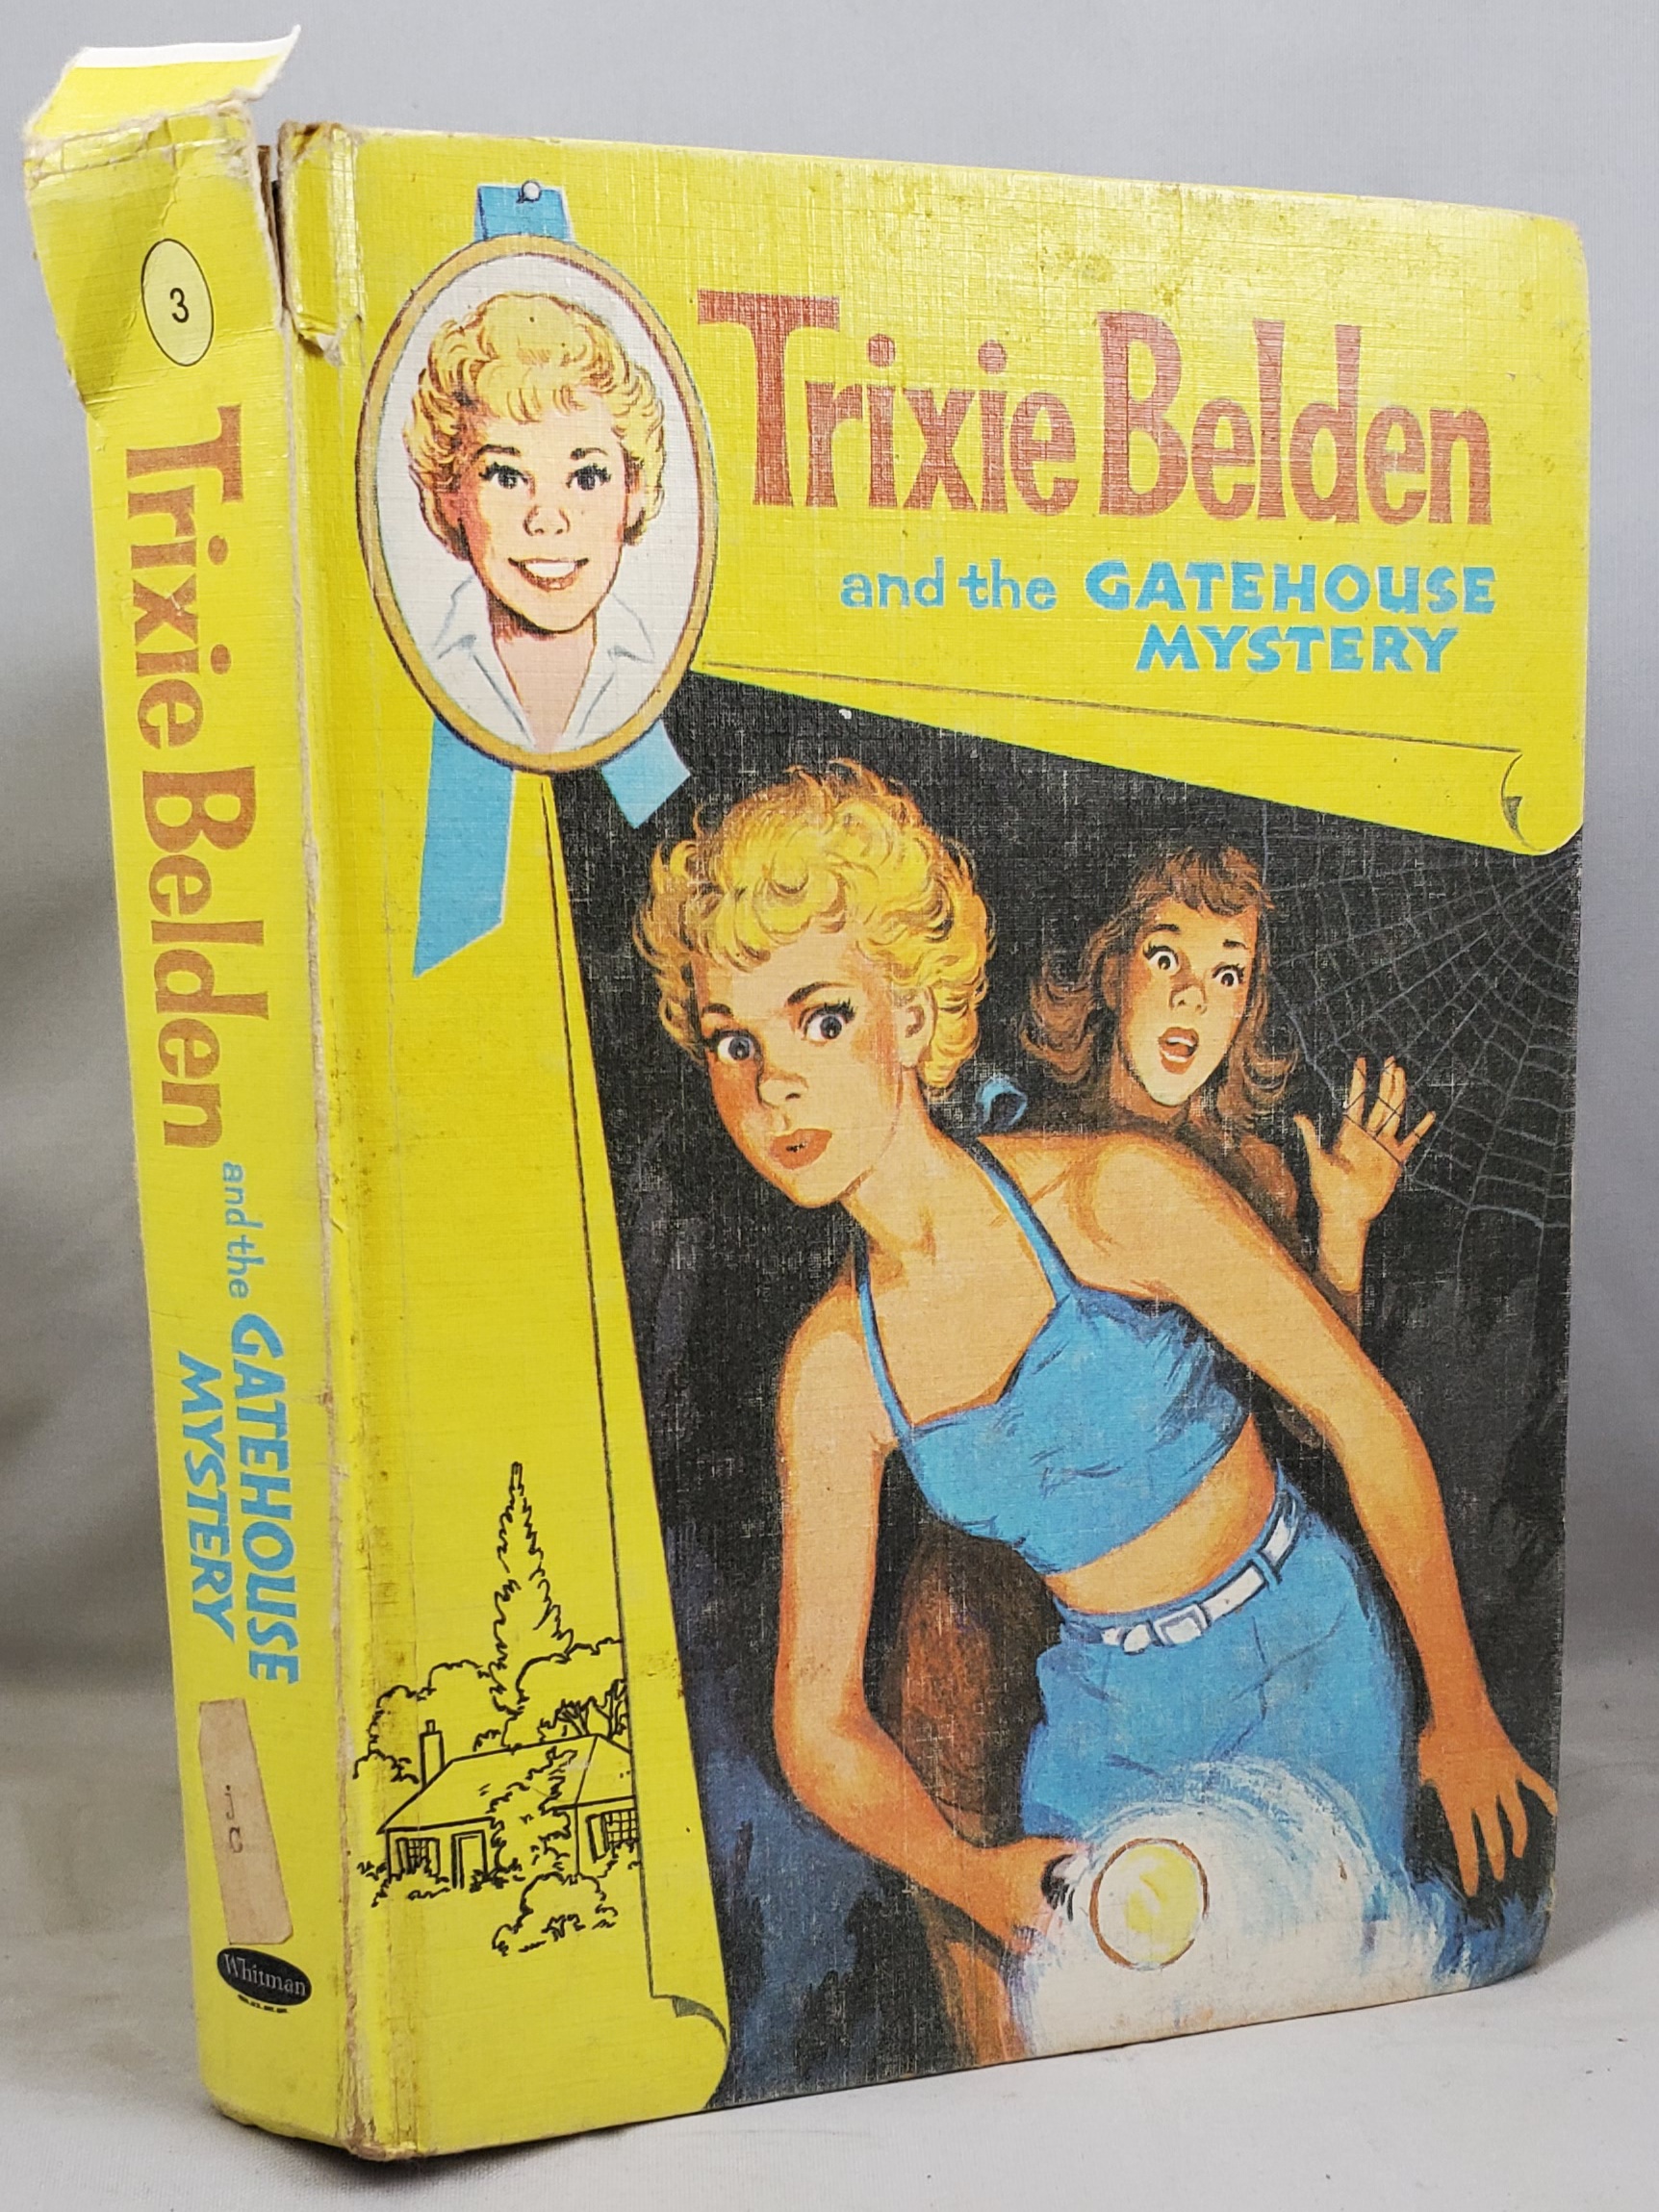 trixie belden and the gatehouse mystery – seek ye best books